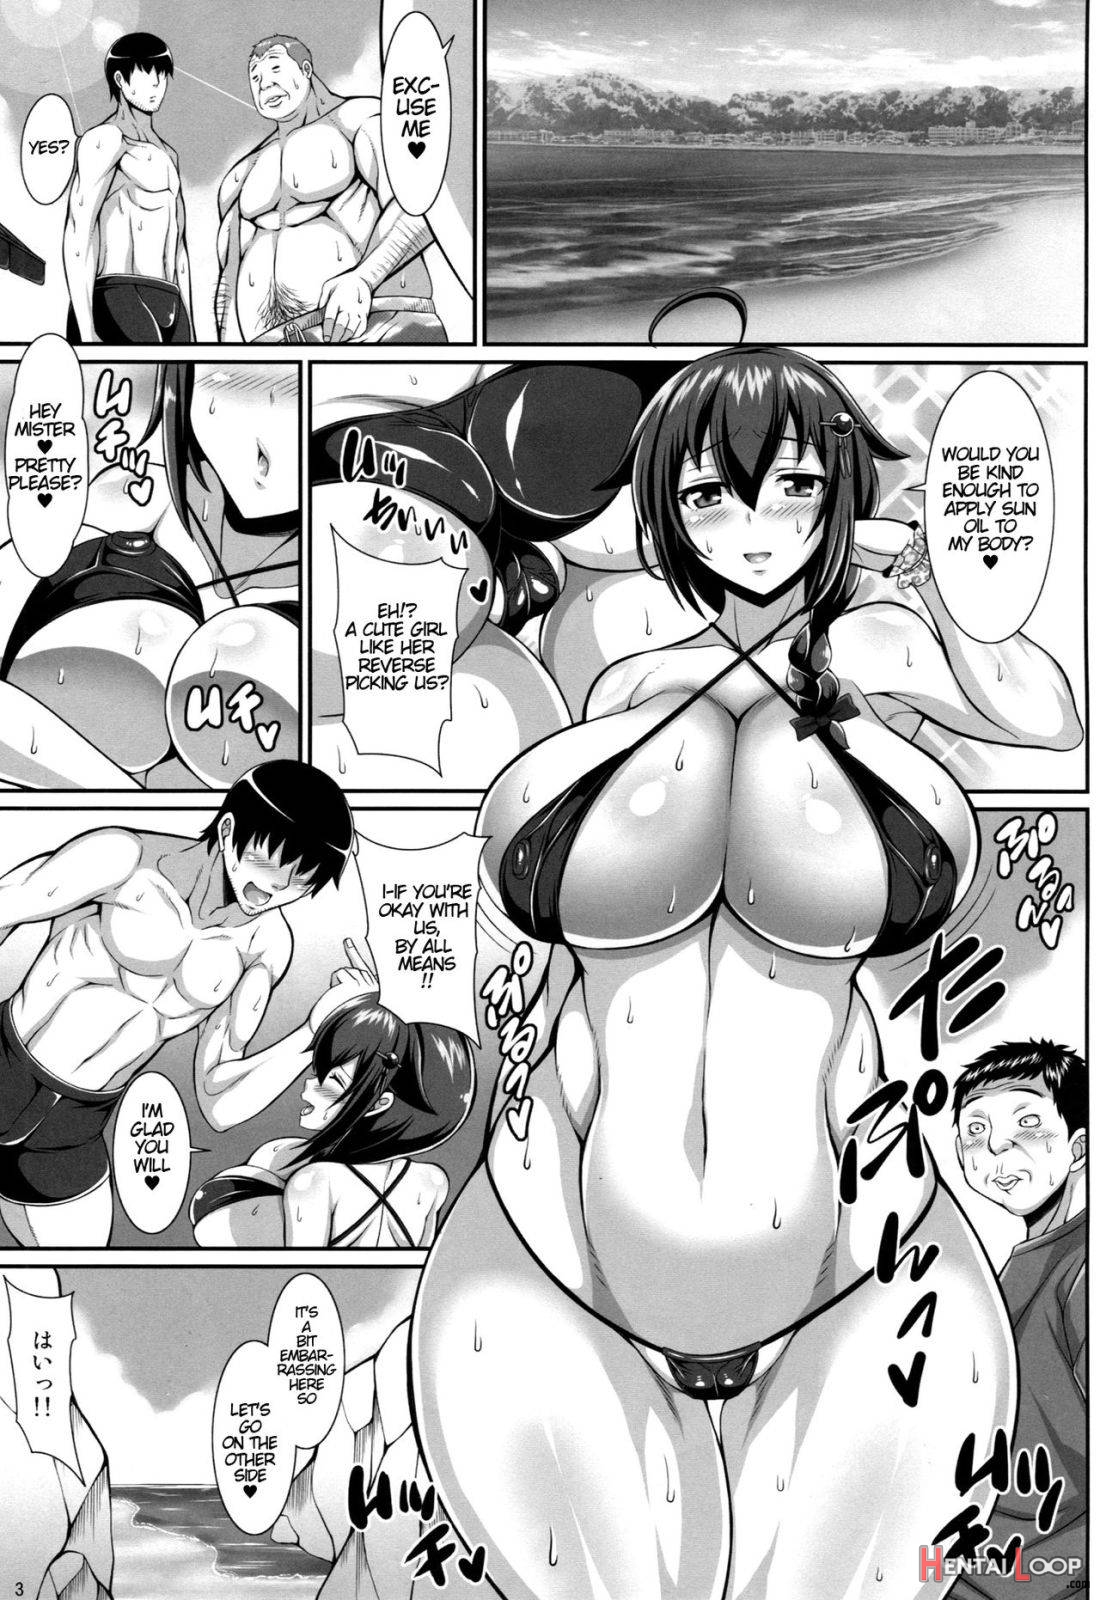 Summer Shigure page 2